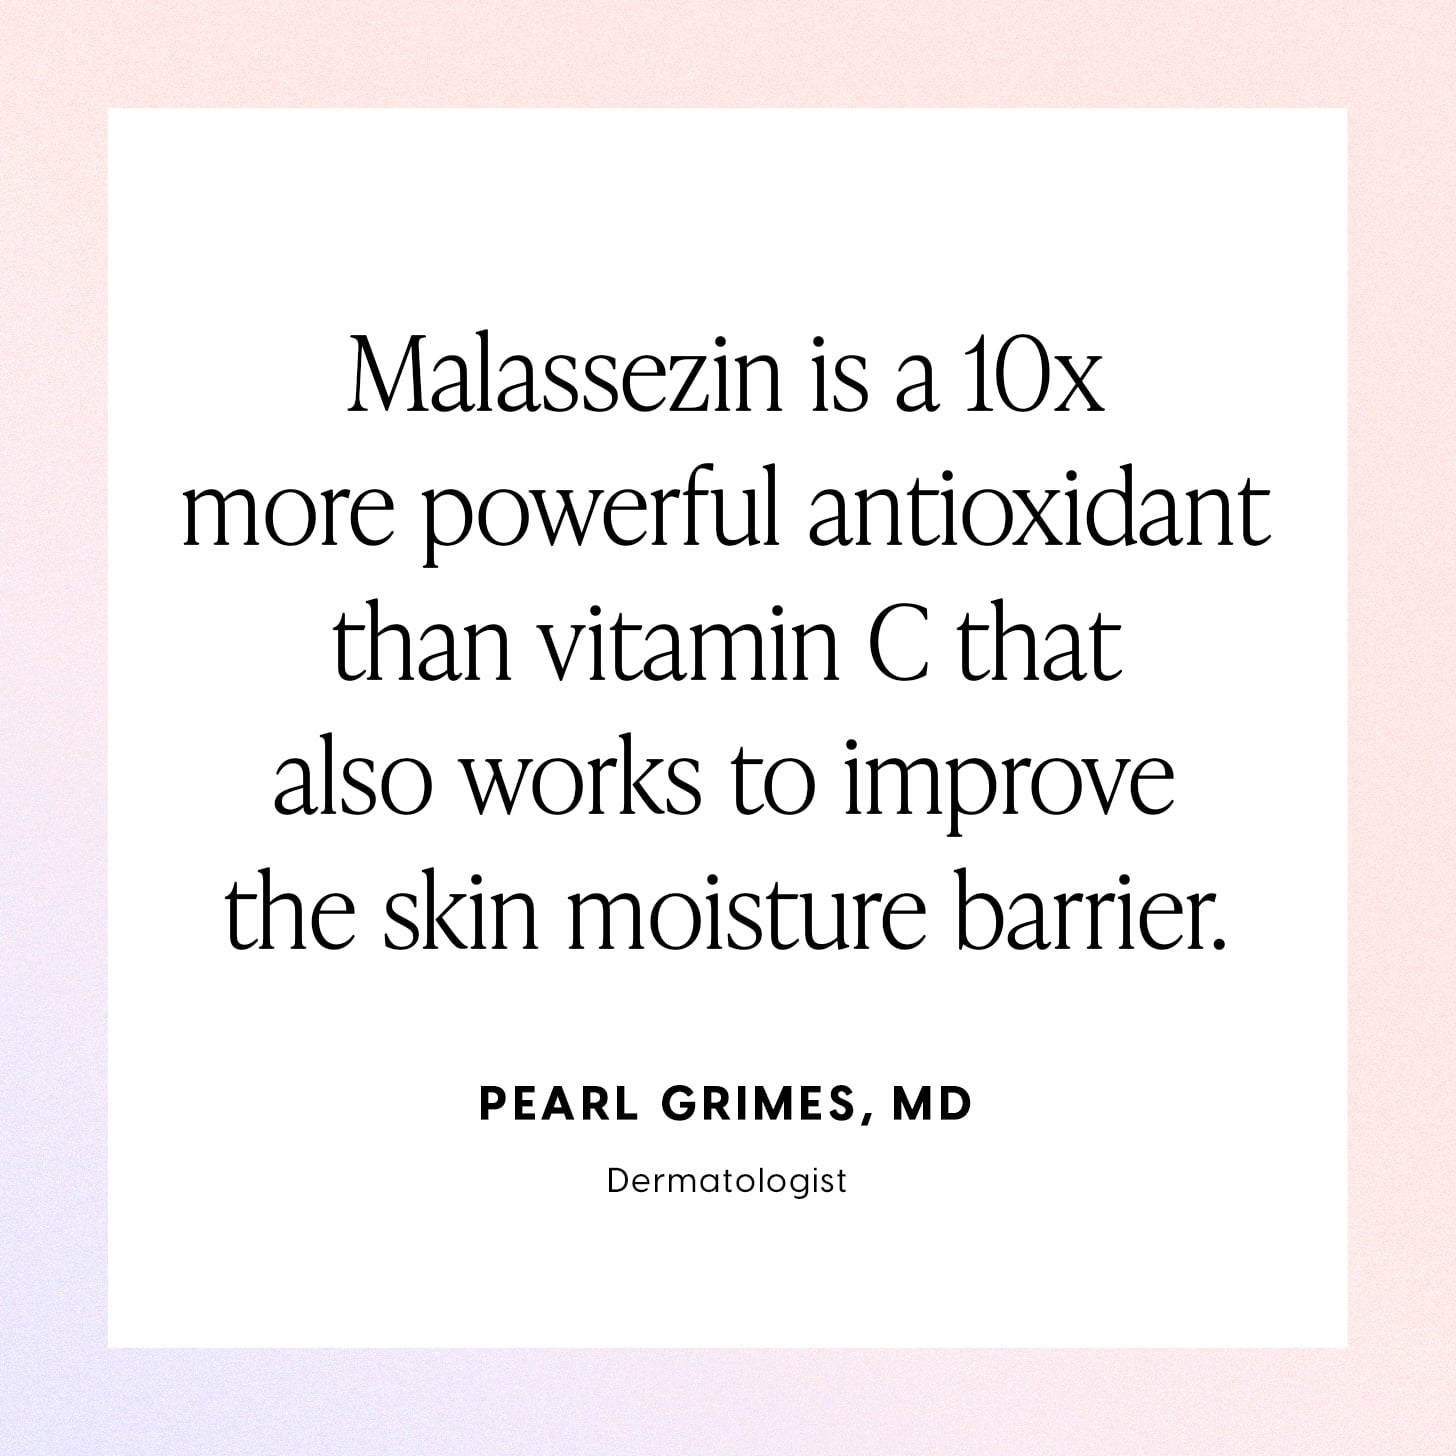 Dermatologist Pearl Grimes discusses new skin-care ingredient malassezin